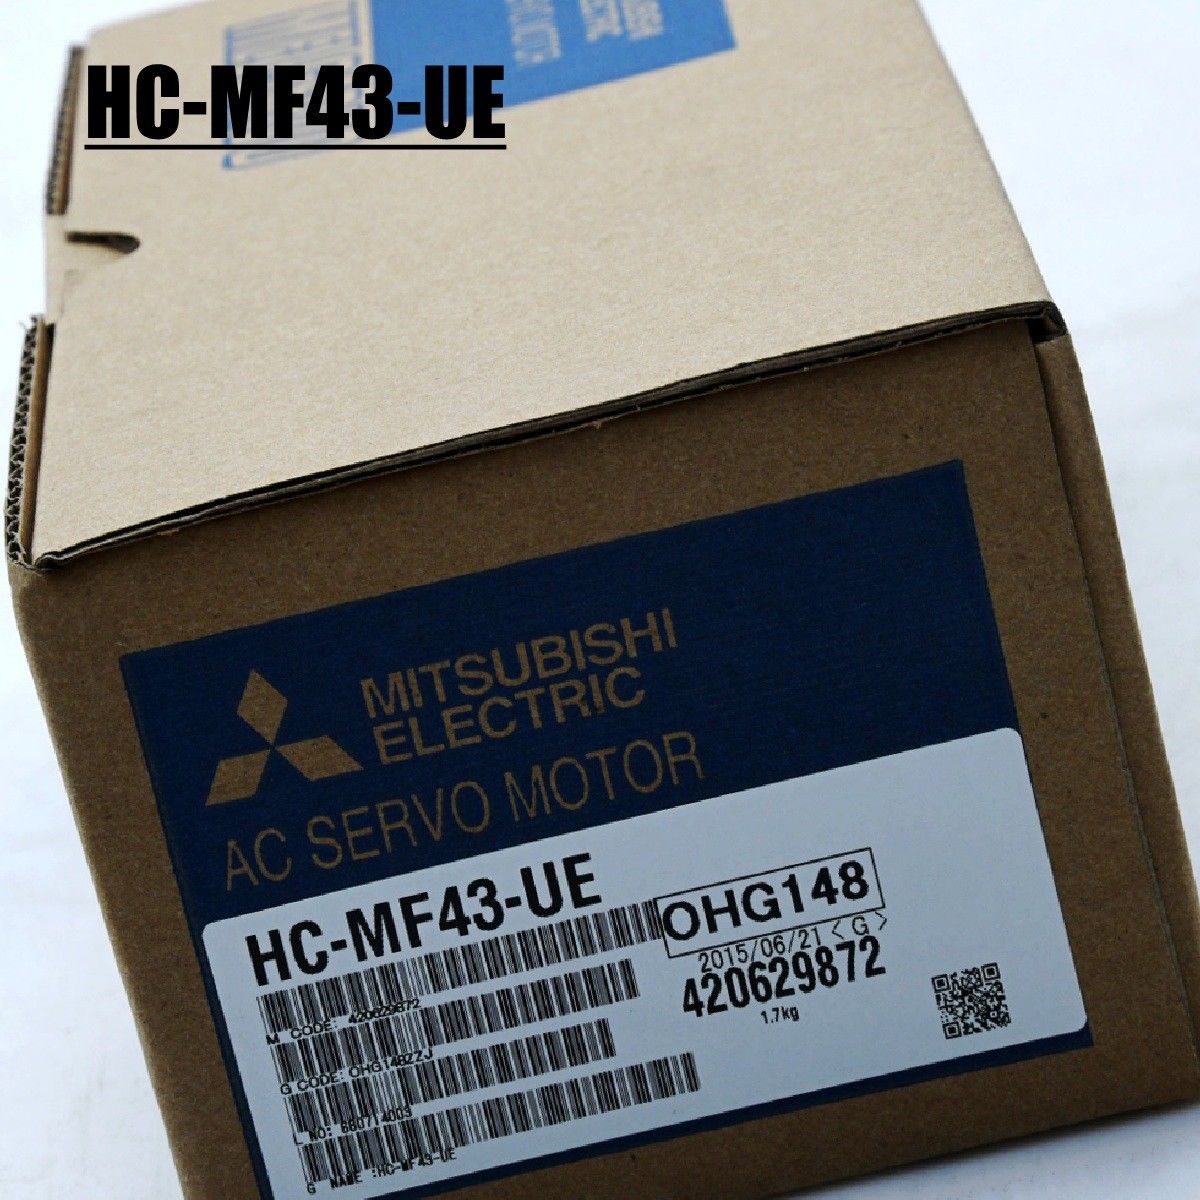 Brand New Mitsubishi Servo Motor HC-MF43-UE IN BOX HCMF43UE